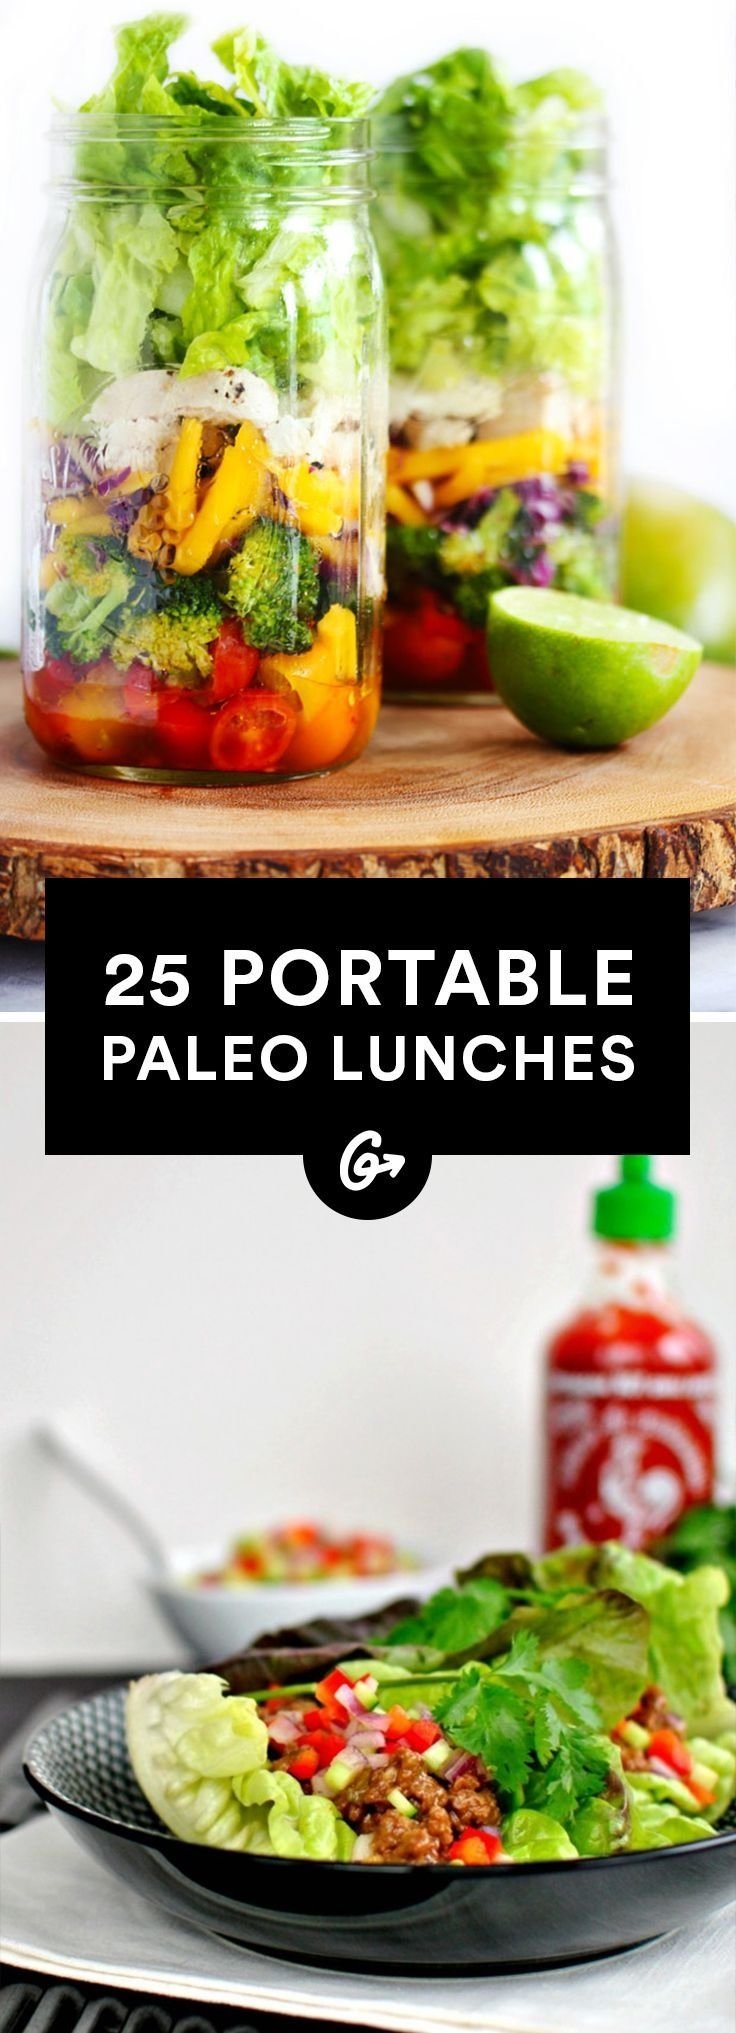 10 Lovable Brown Bag Lunch Ideas For Work 916 best school lunch images on pinterest aga hazelnut allergy 2022